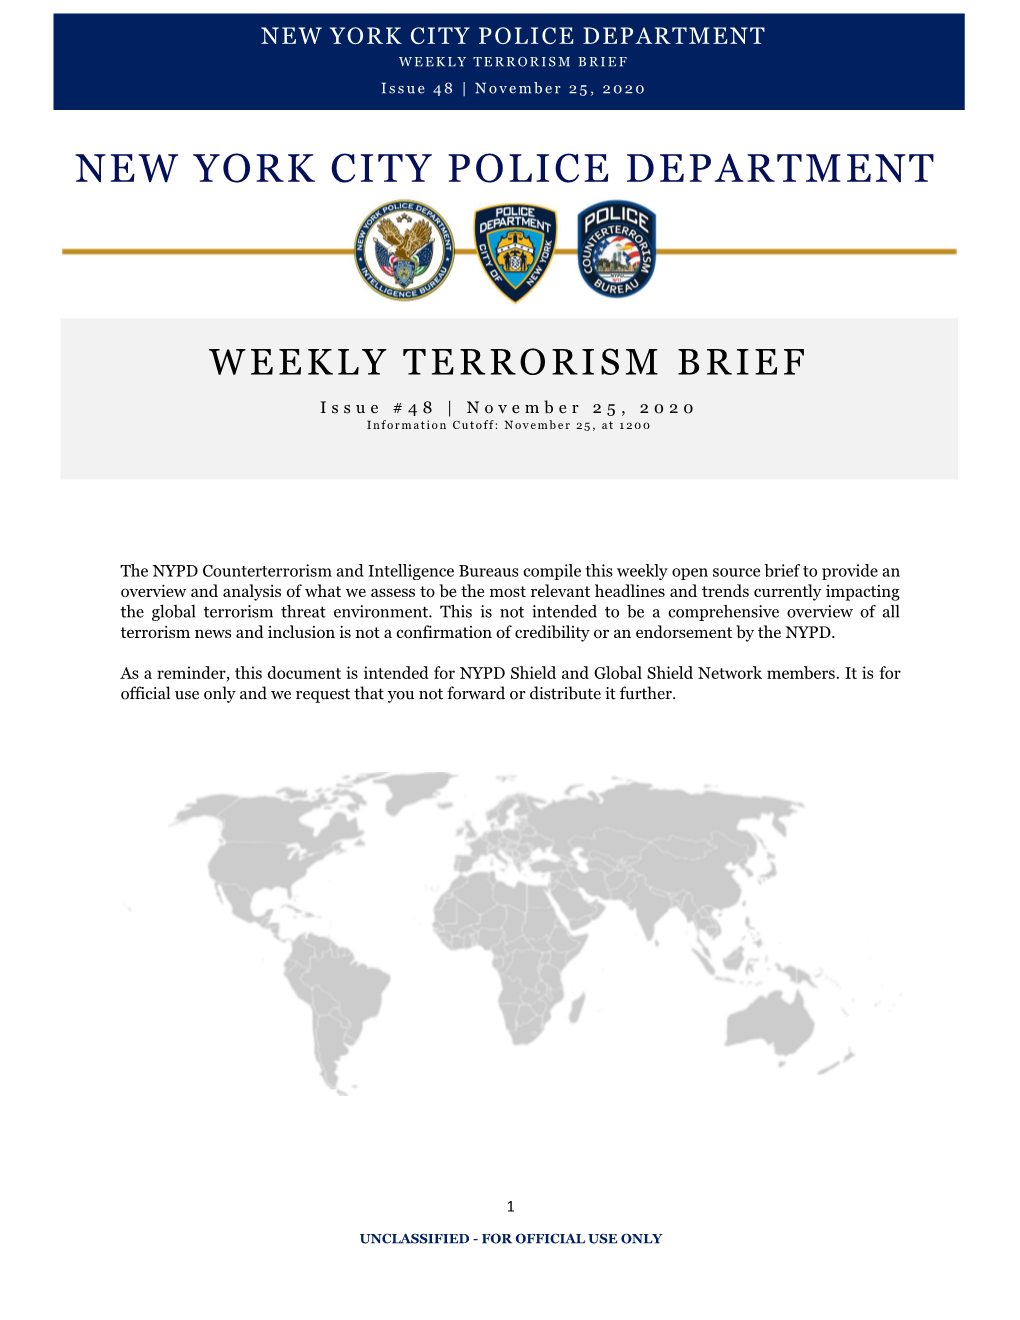 NYPD Weekly Terrorism Brief 48 2020